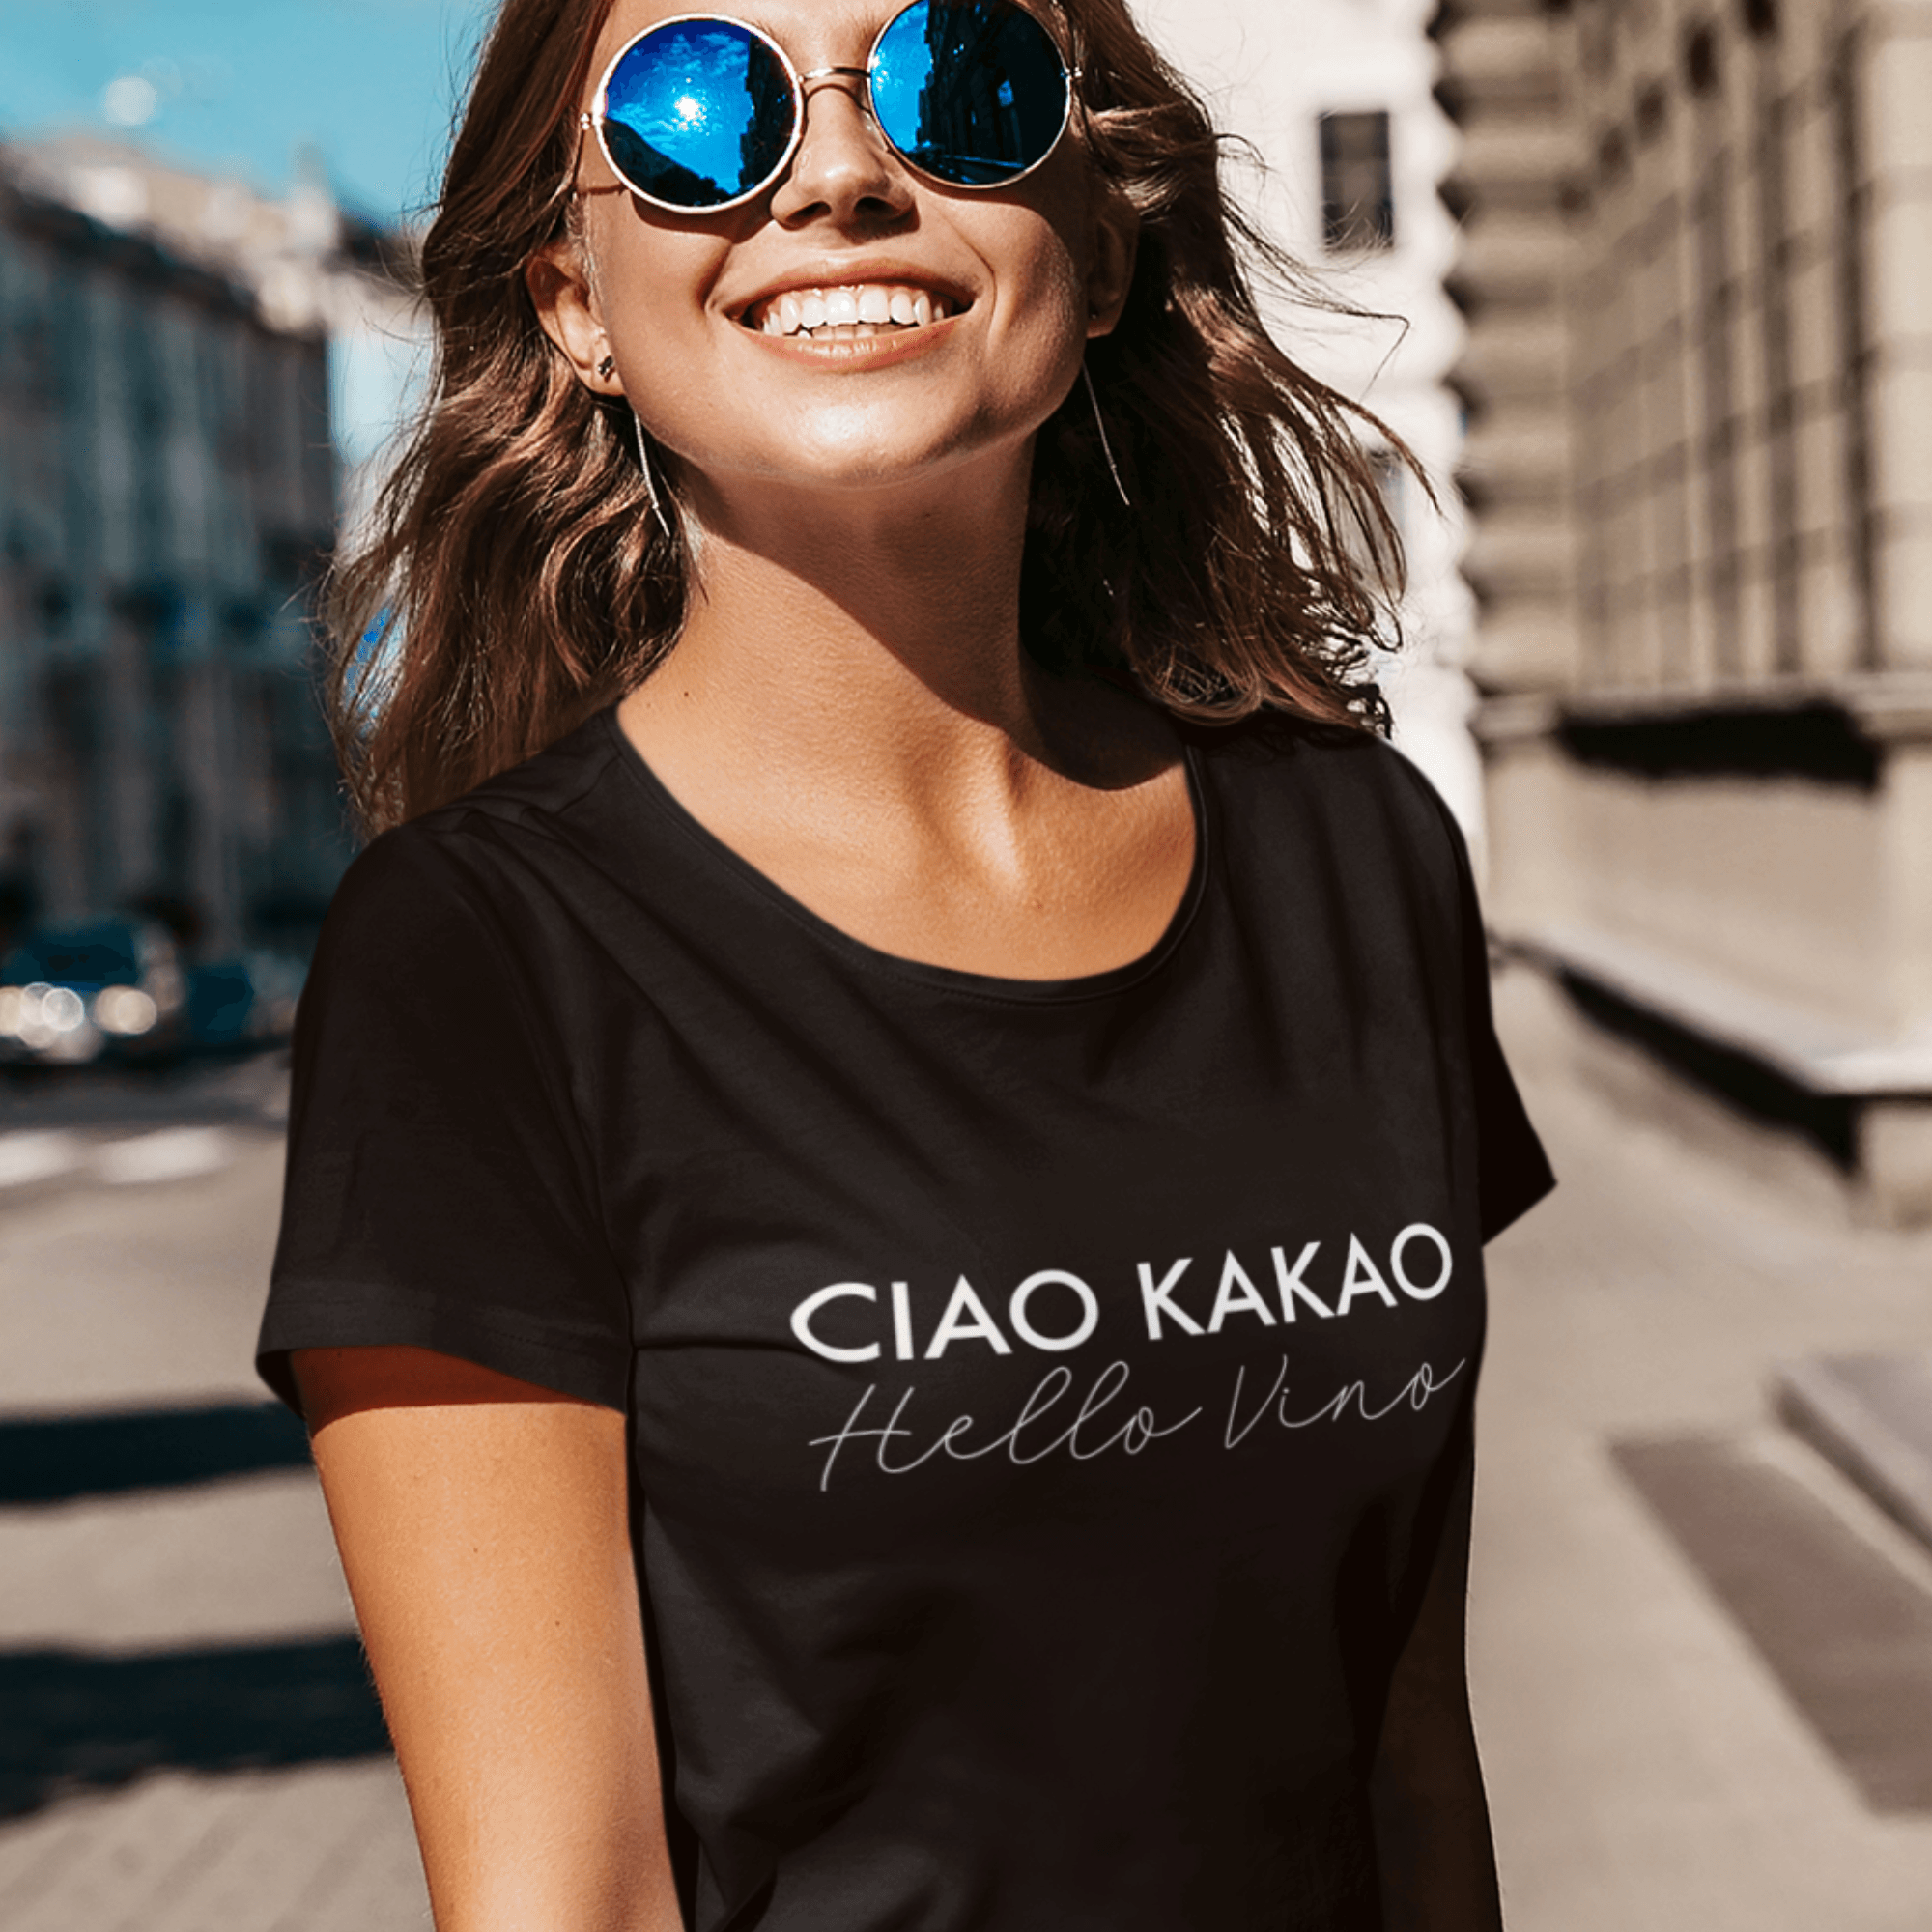 CIAO KAKAO - Damen Premiumshirt - einschenken24.de